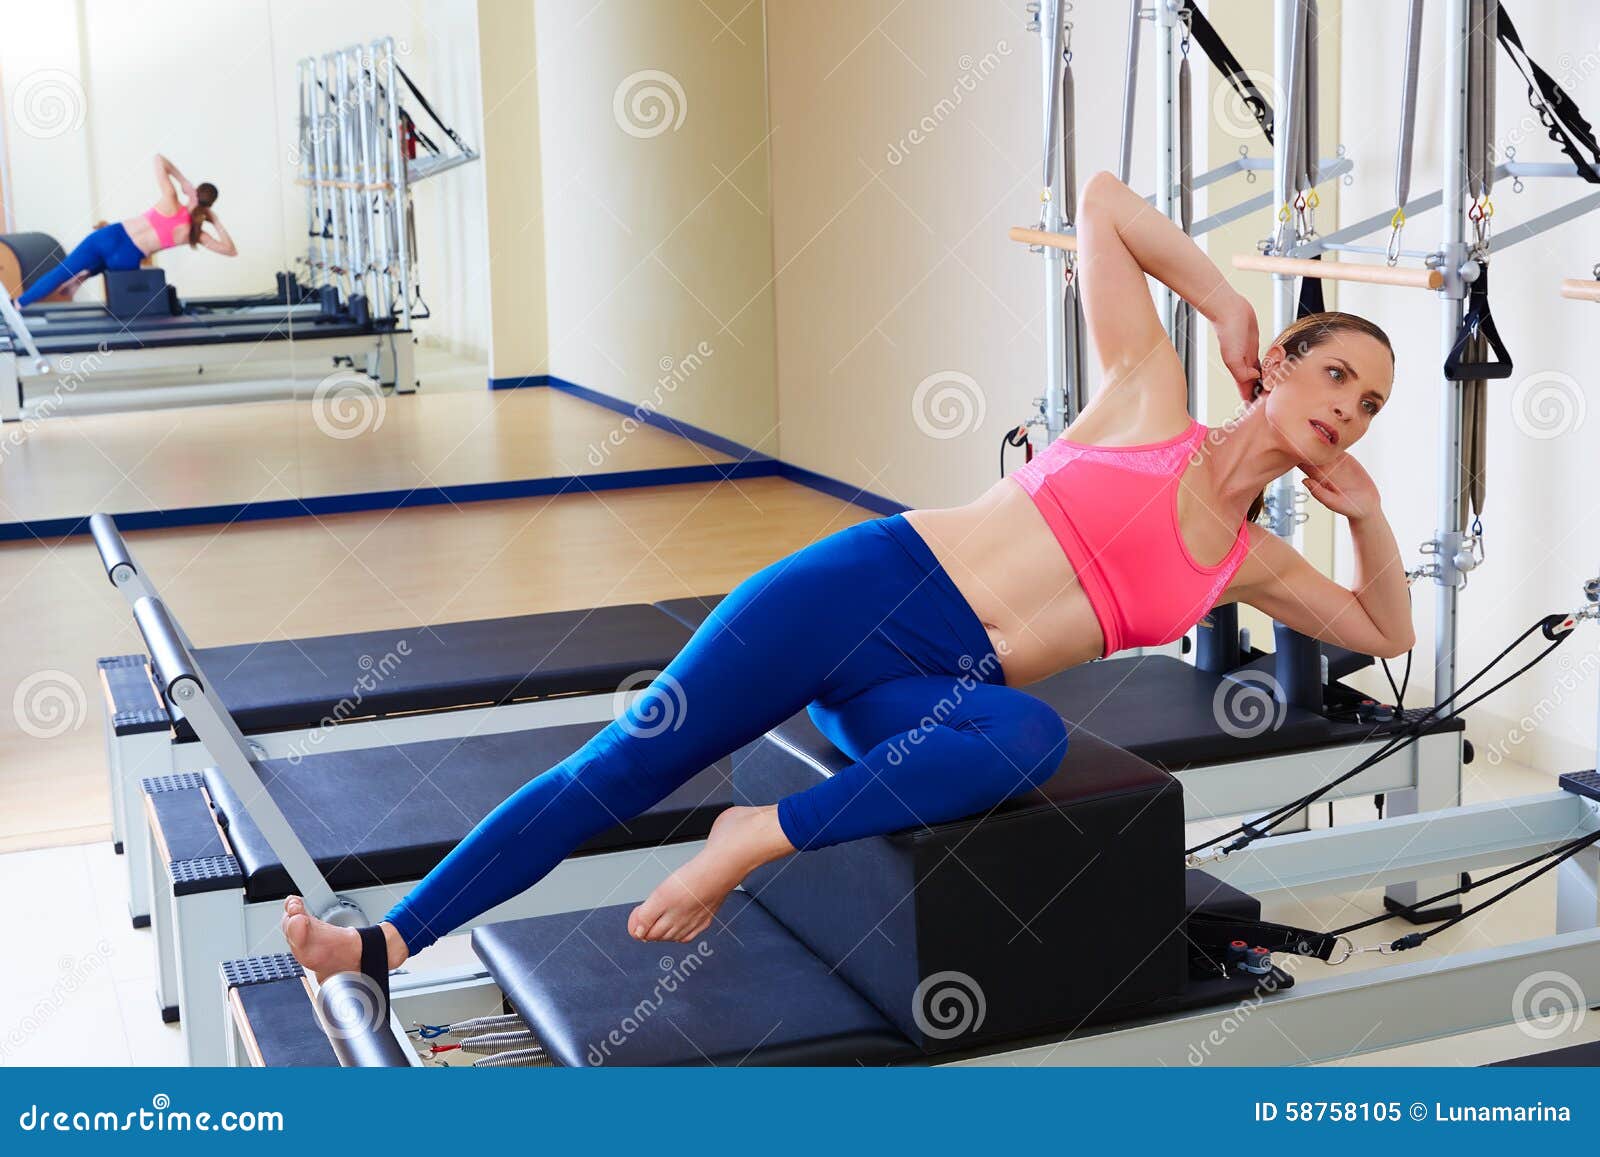 pilates reformer woman short box side stretch